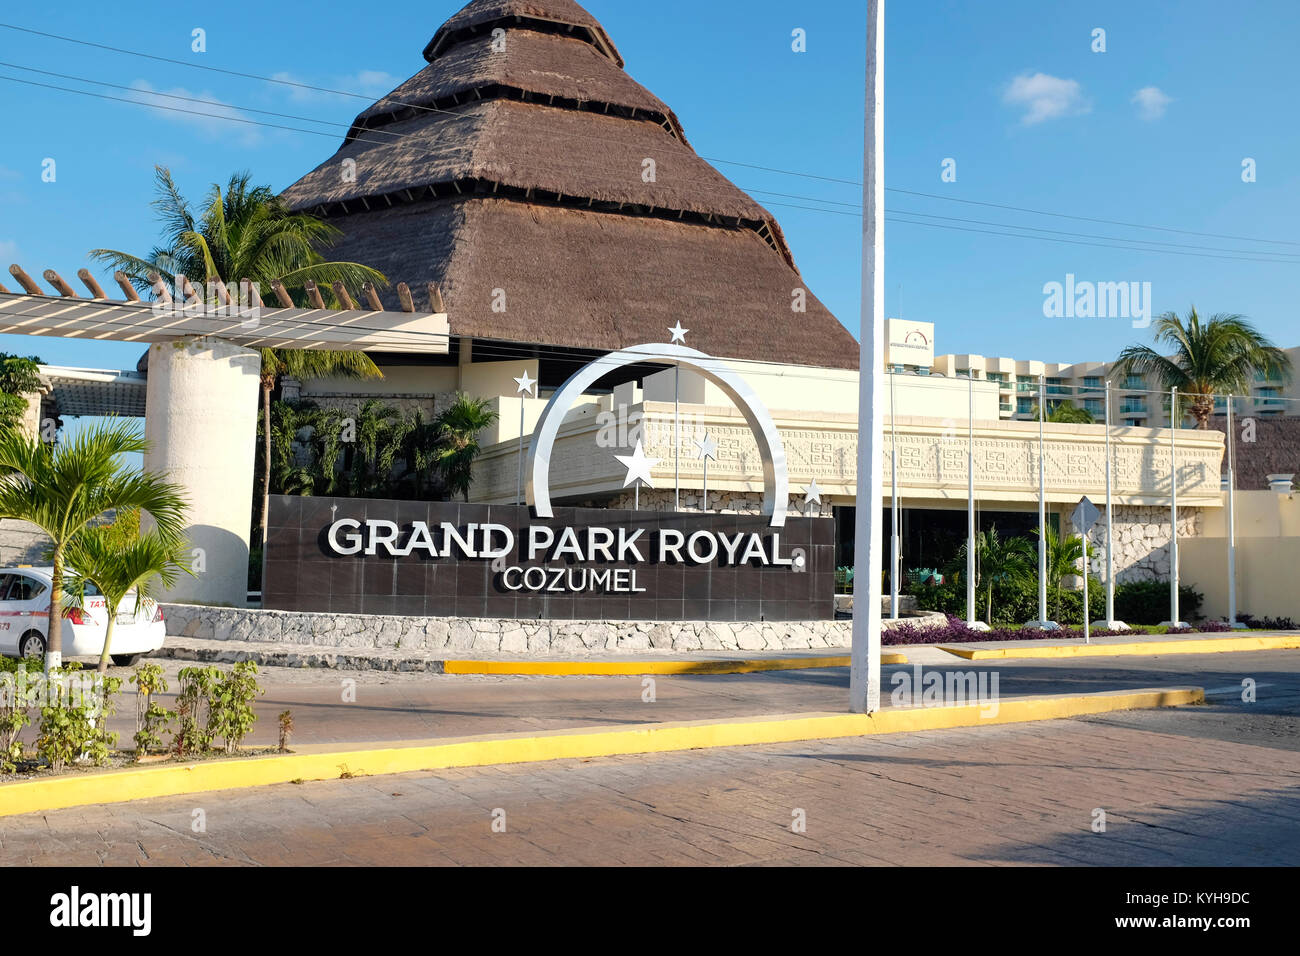 Grand Park Royal Hotel Cozumel, Mexico Stock Photo - Alamy